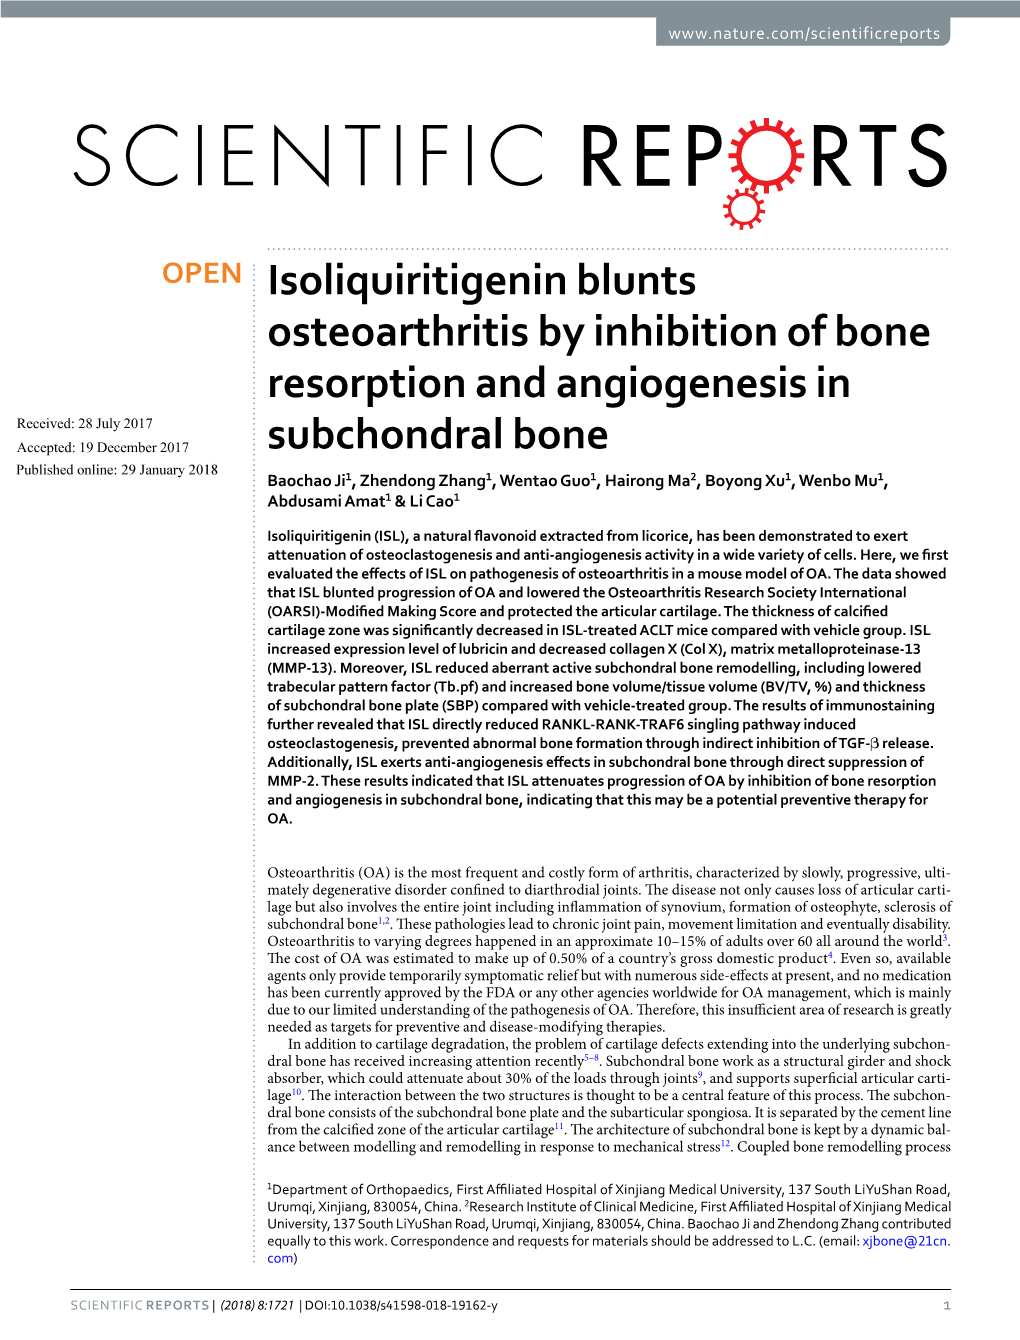 Isoliquiritigenin Blunts Osteoarthritis by Inhibition of Bone Resorption And